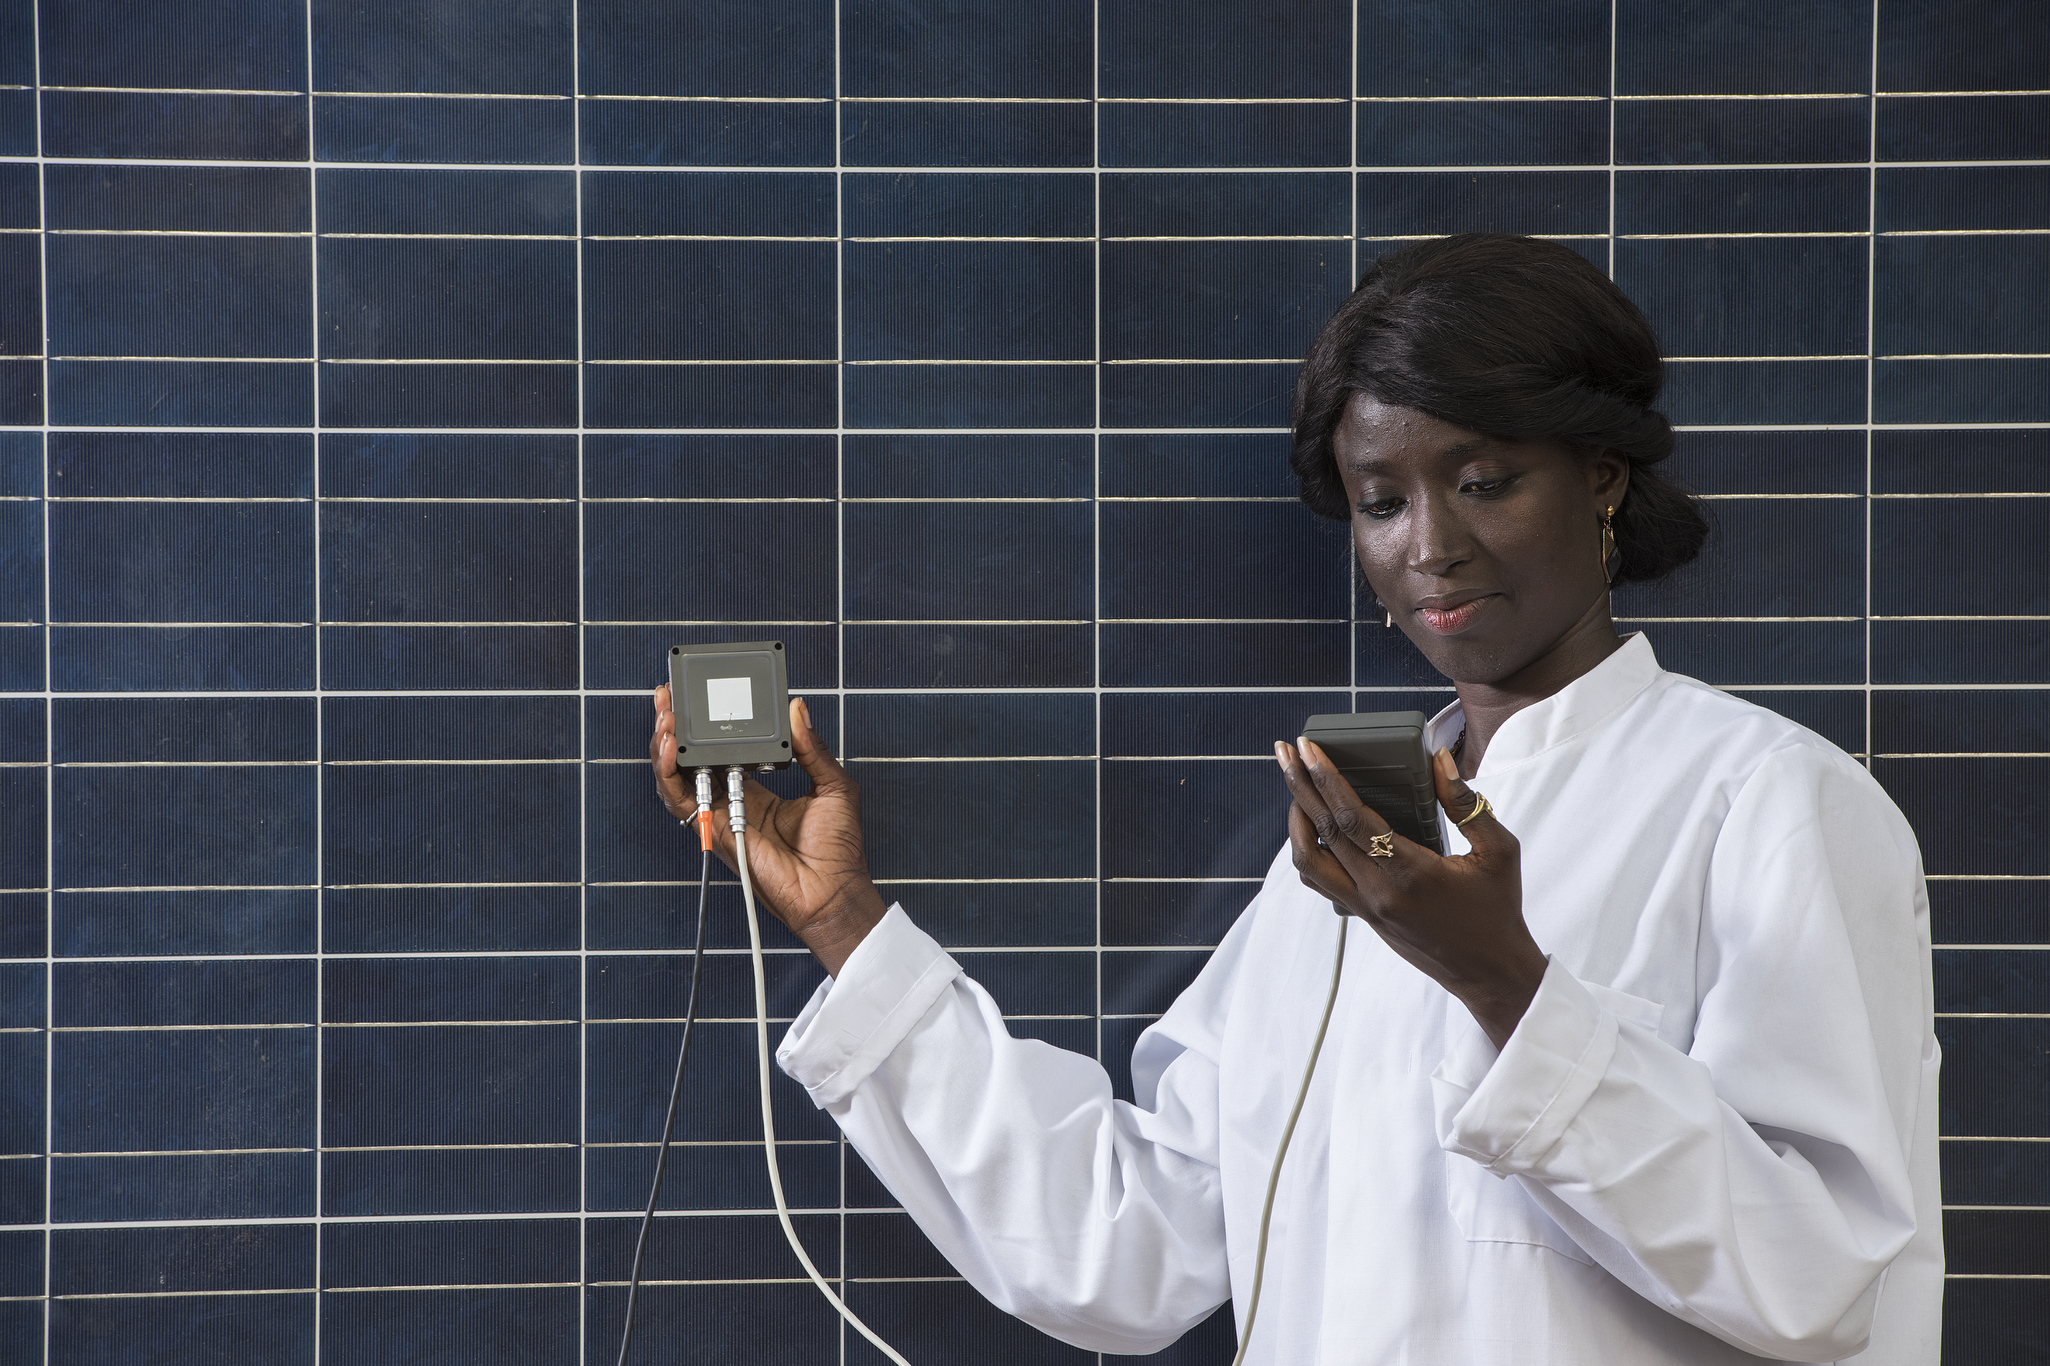 La­mi­ne Ba­ra Dia­gne prüft ei­nen di­gi­ta­len Ther­mo­me­ter­füh­ler.